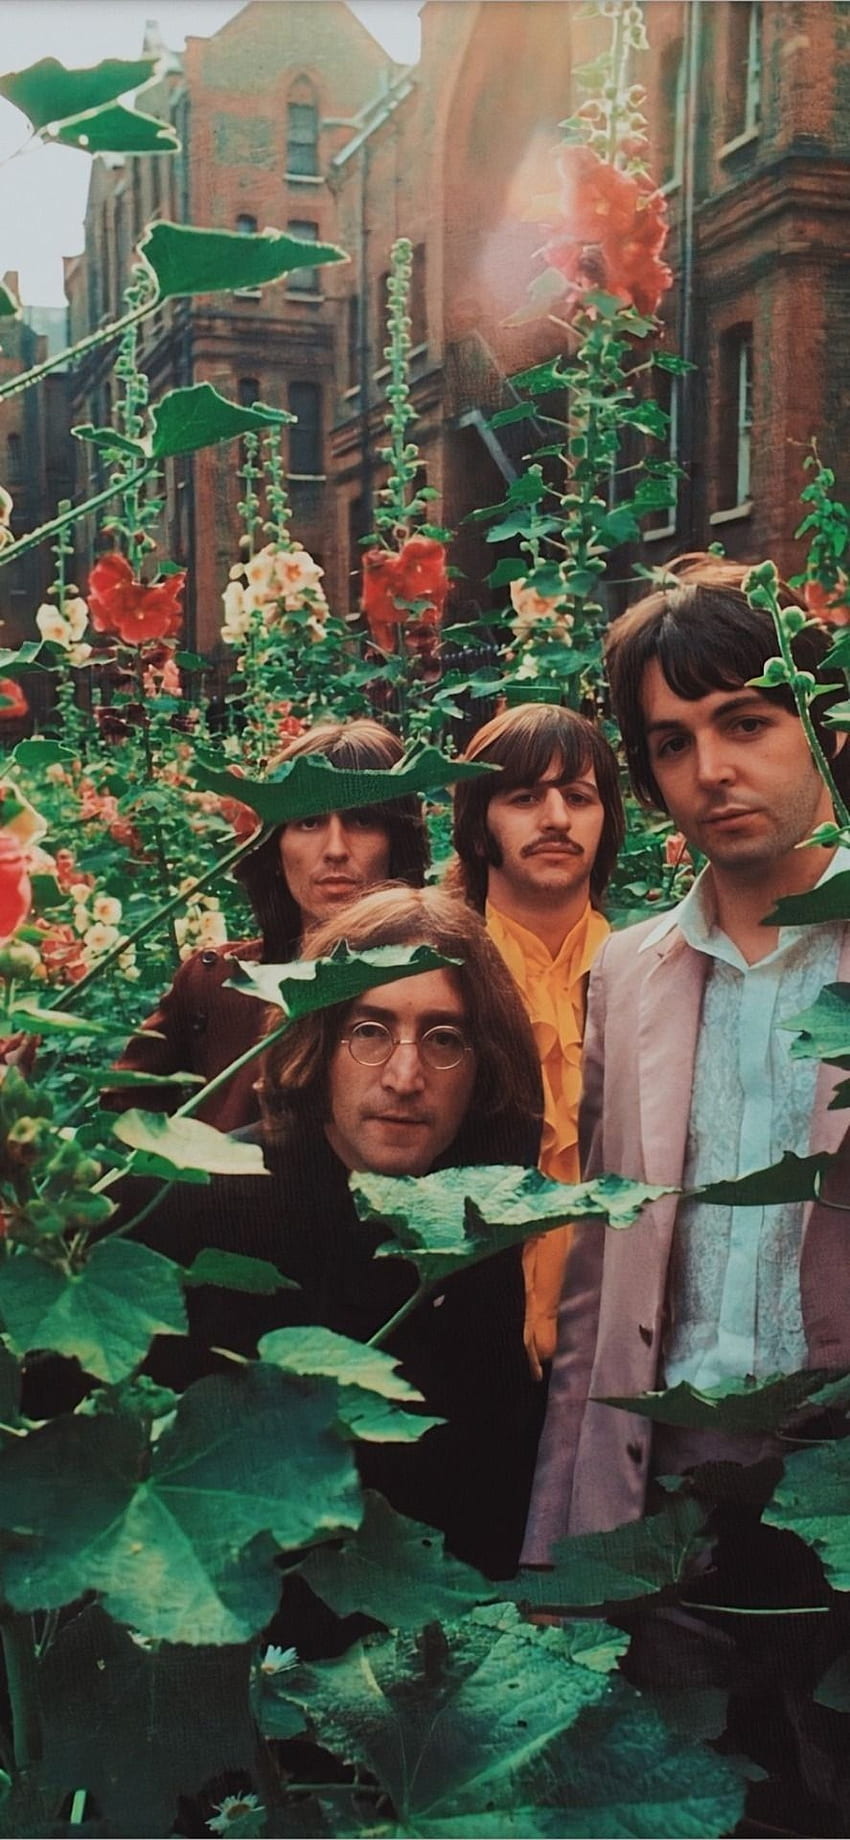 The Beatles, rock, verde, música, trippy, natureza, vintage, legal, retrô, anos 60, anos 70 Papel de parede de celular HD